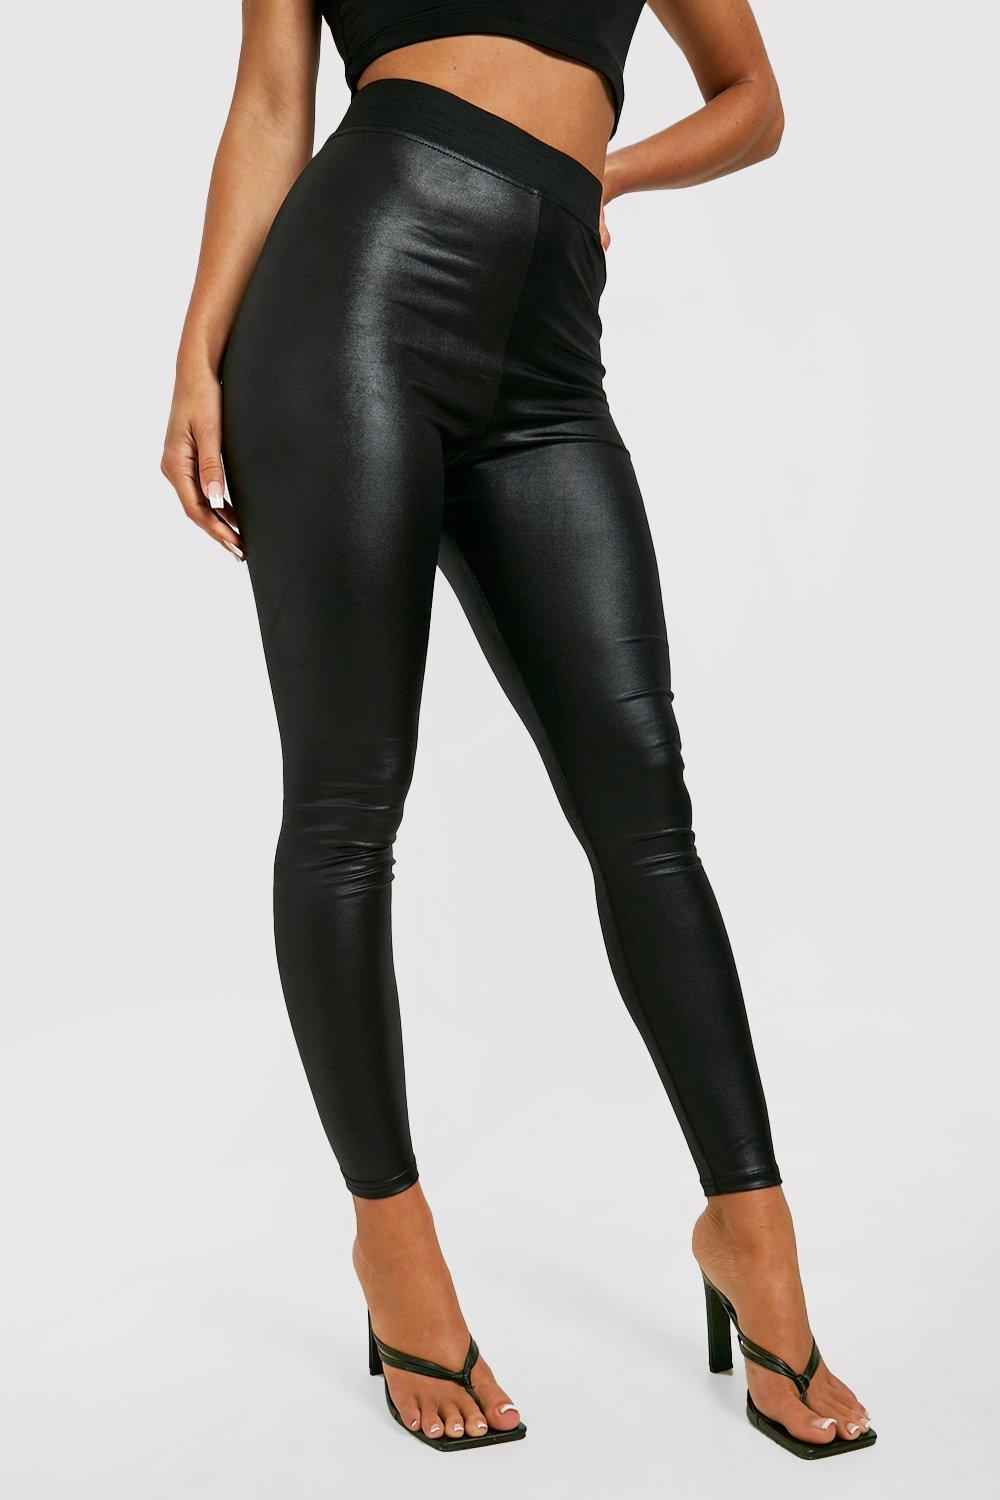 Boohoo Split Front PU Faux Leather Leggings Trousers Wet Look Black UK Size  12